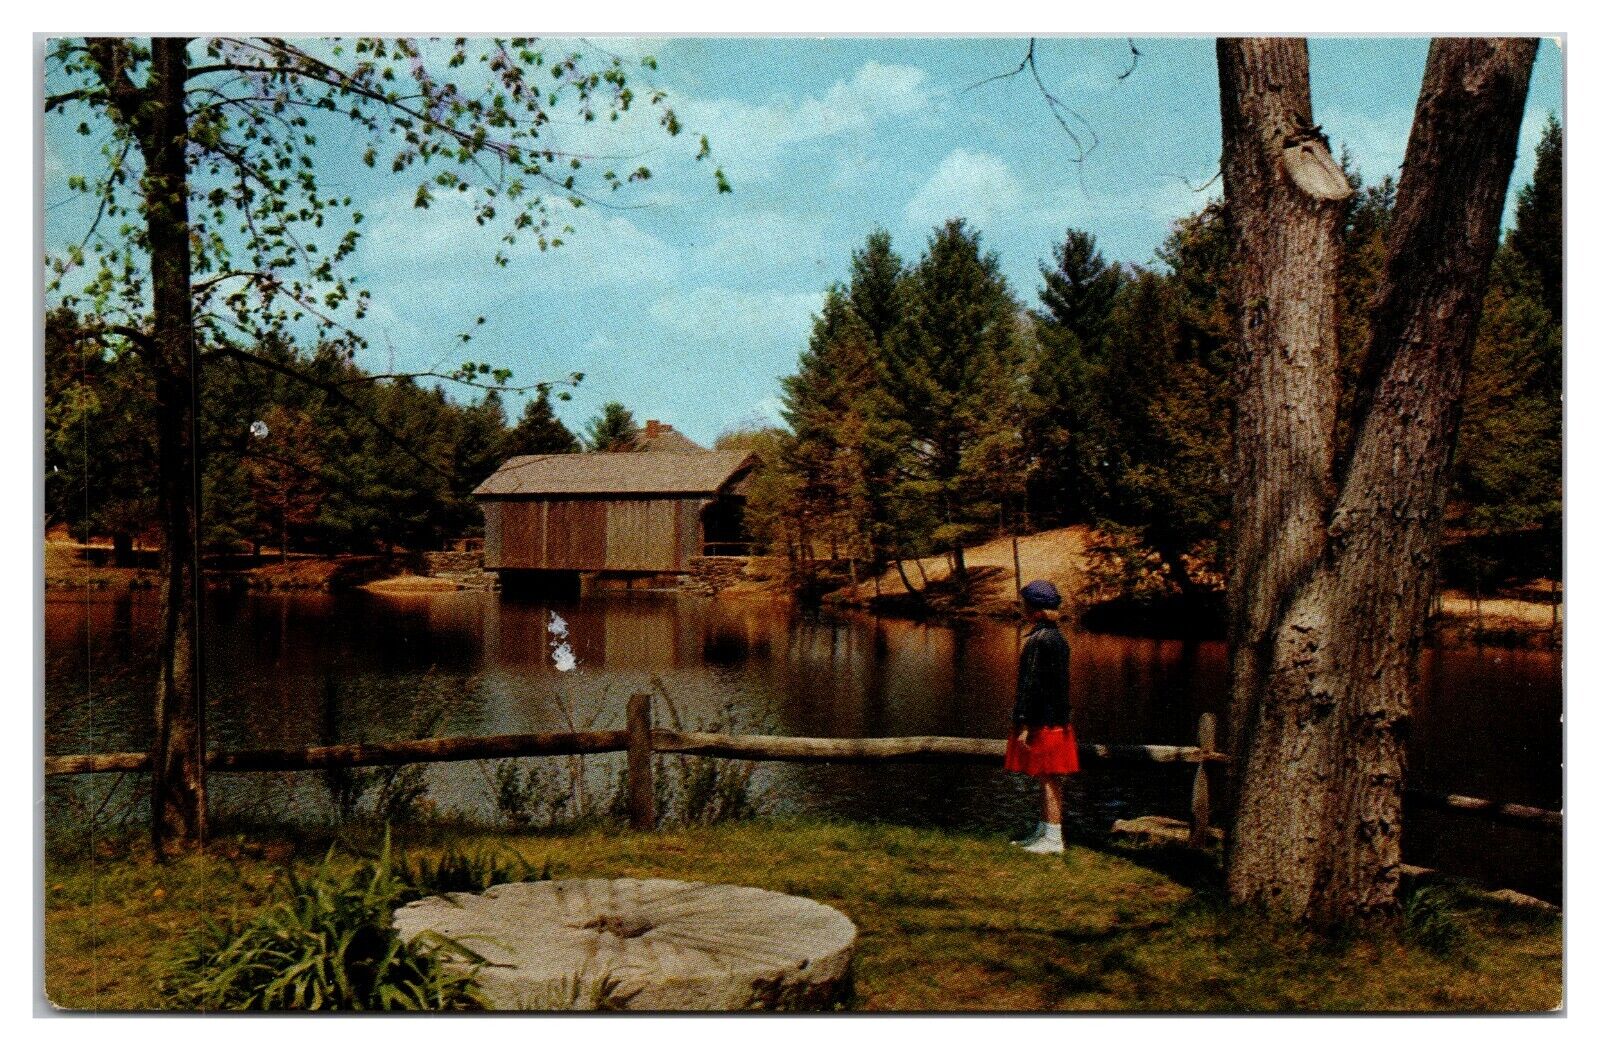 A View of the Millpond, Old Sturbridge Village, Massachusetts Postcard